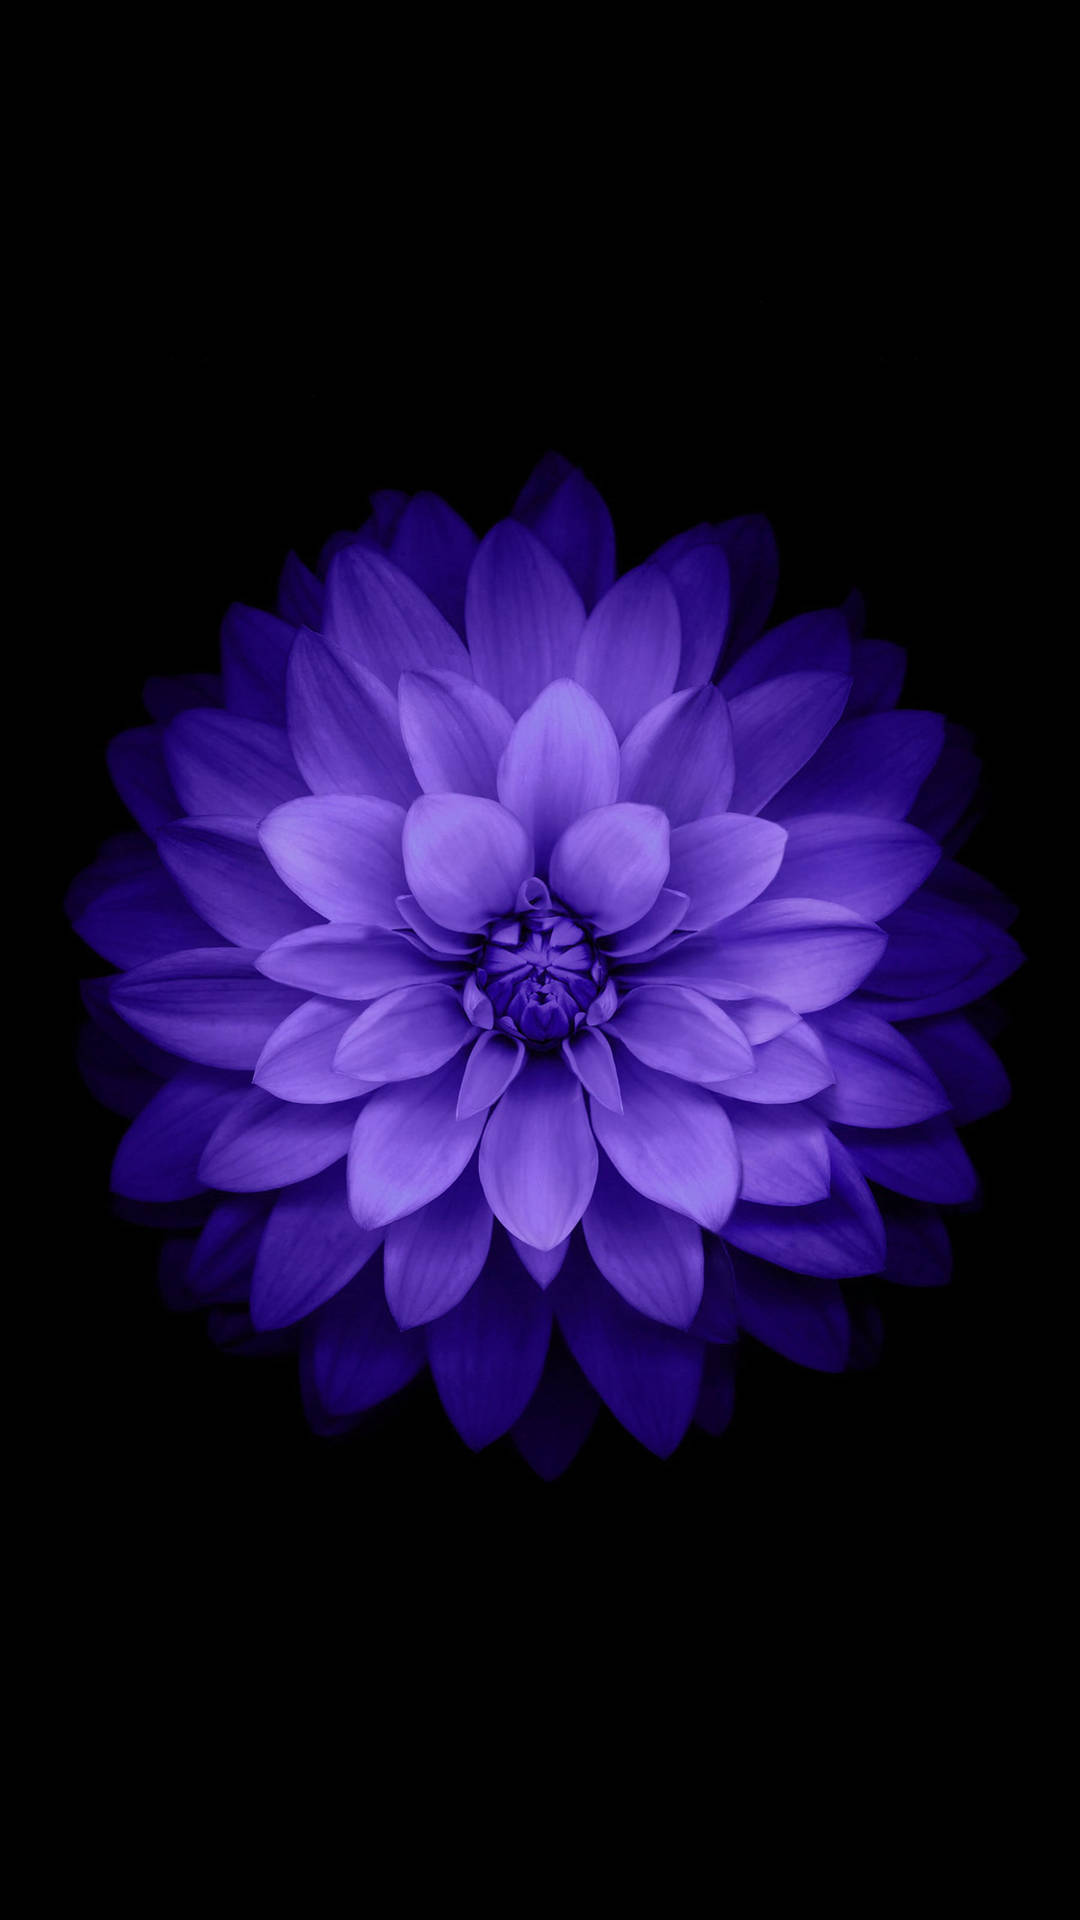 Aesthetic Purple Dahlia Flower Mobile